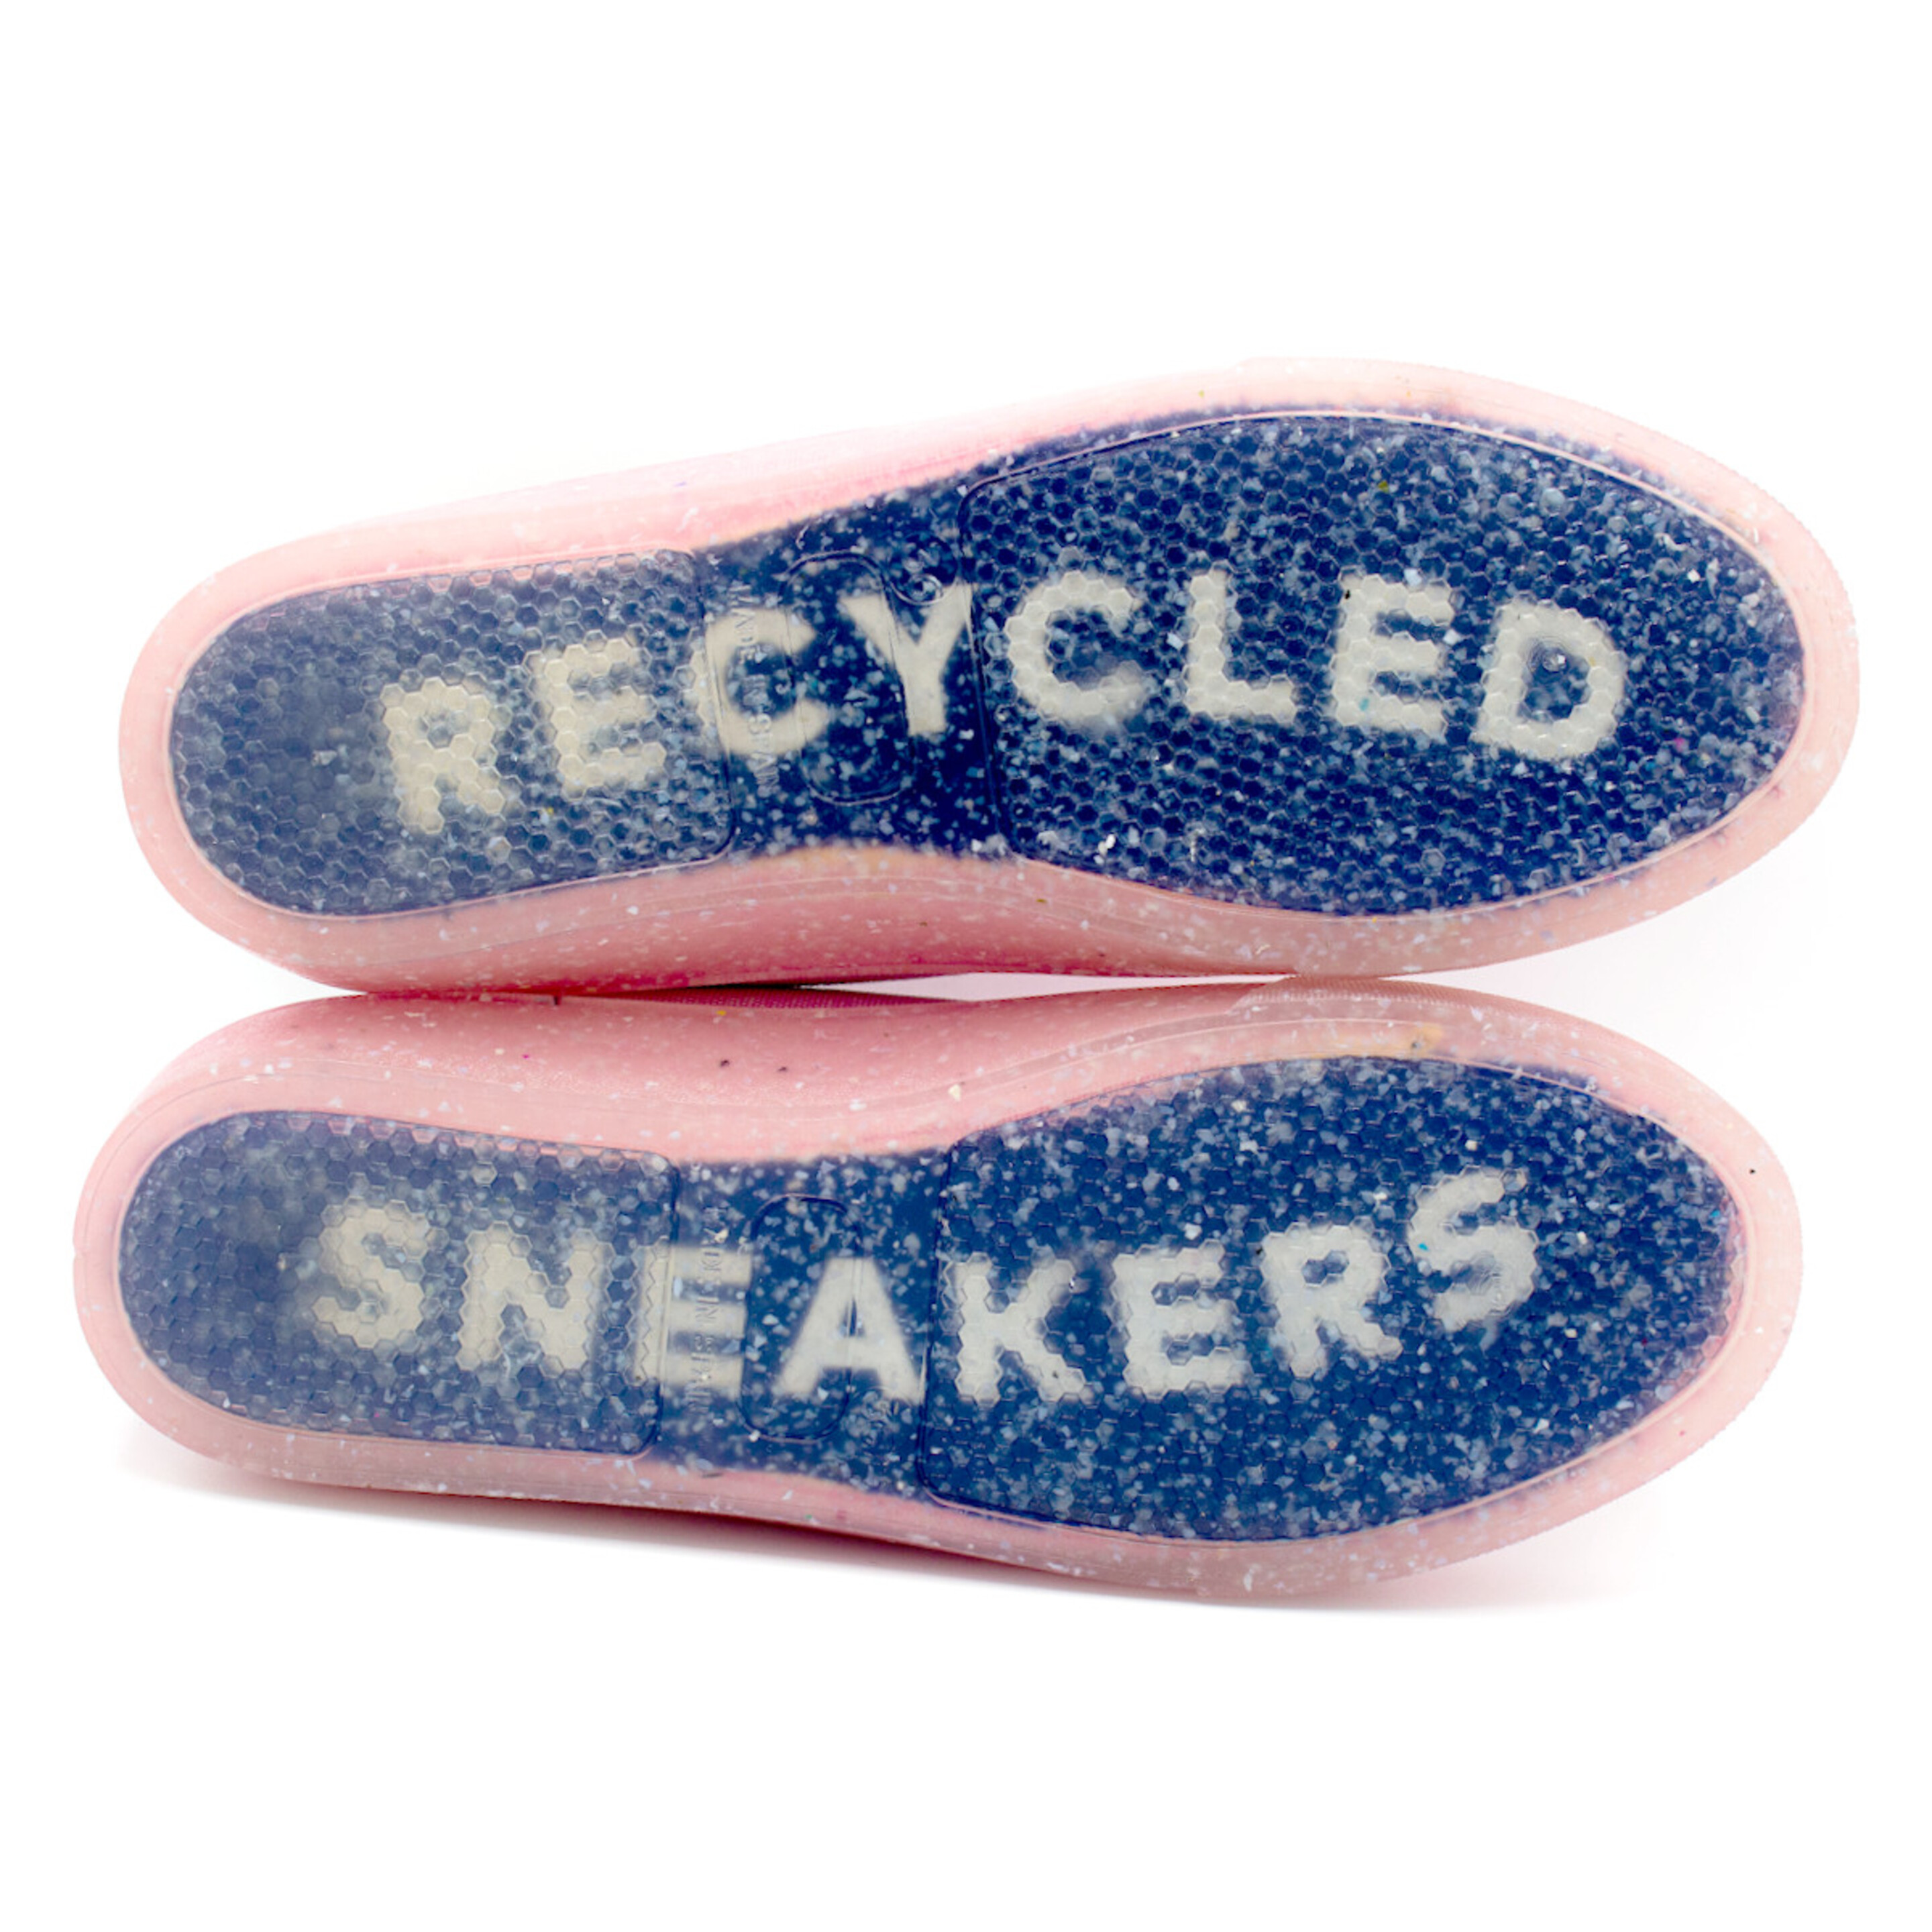 Sneaker Recykers Peckham - rosa - Recycled Sneakers  MKP